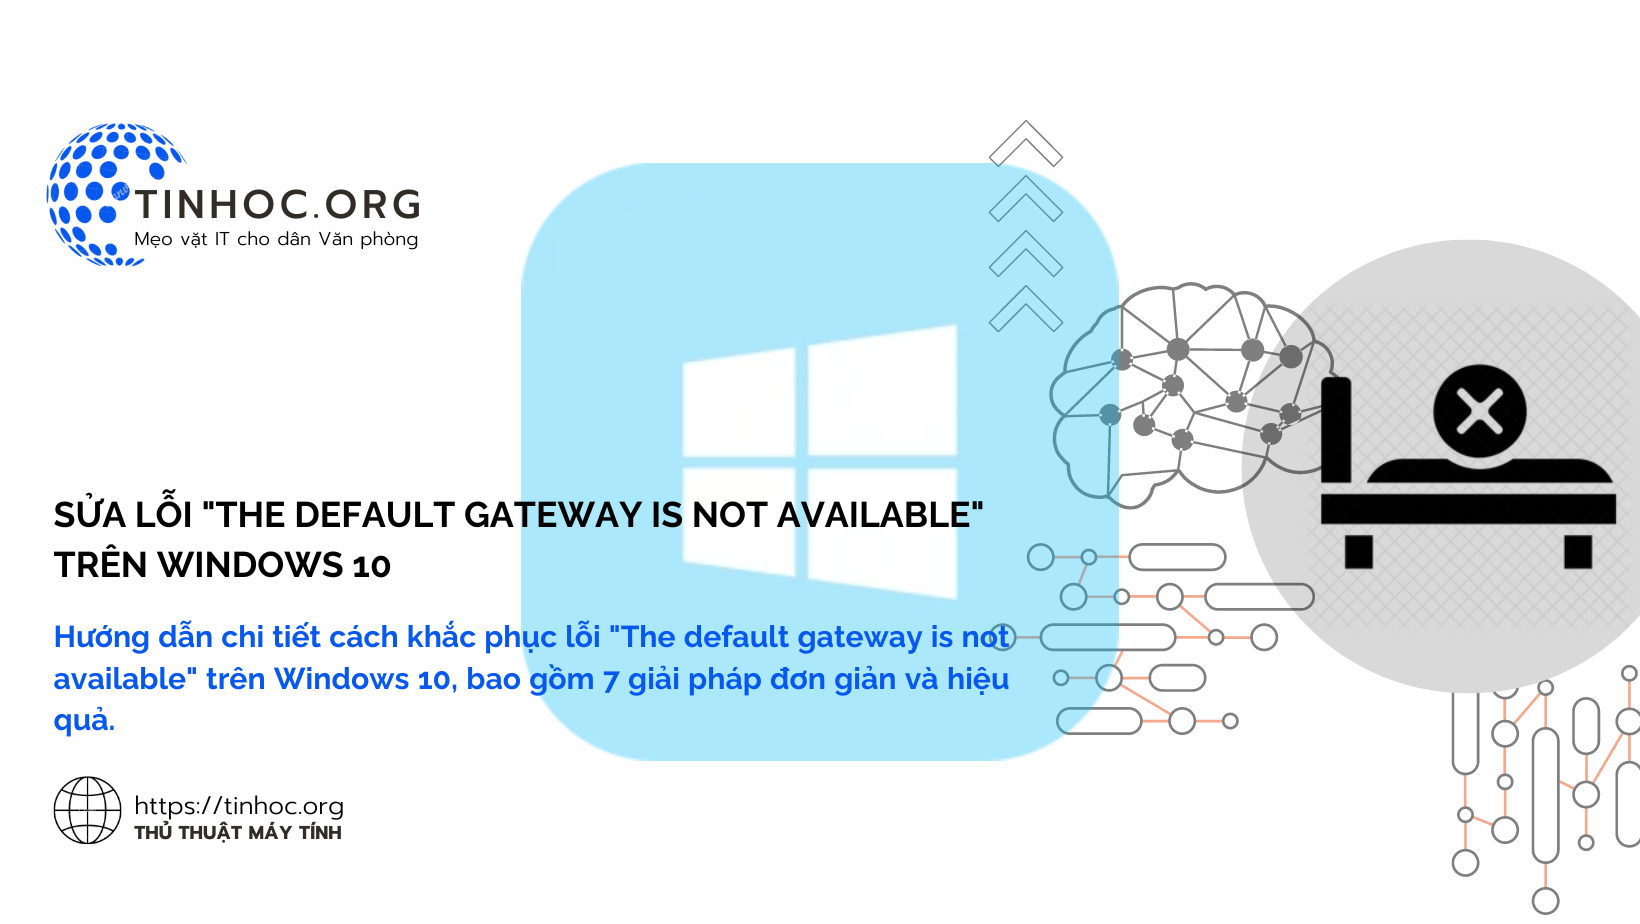 Sửa lỗi "The default gateway is not available" trên Windows 10